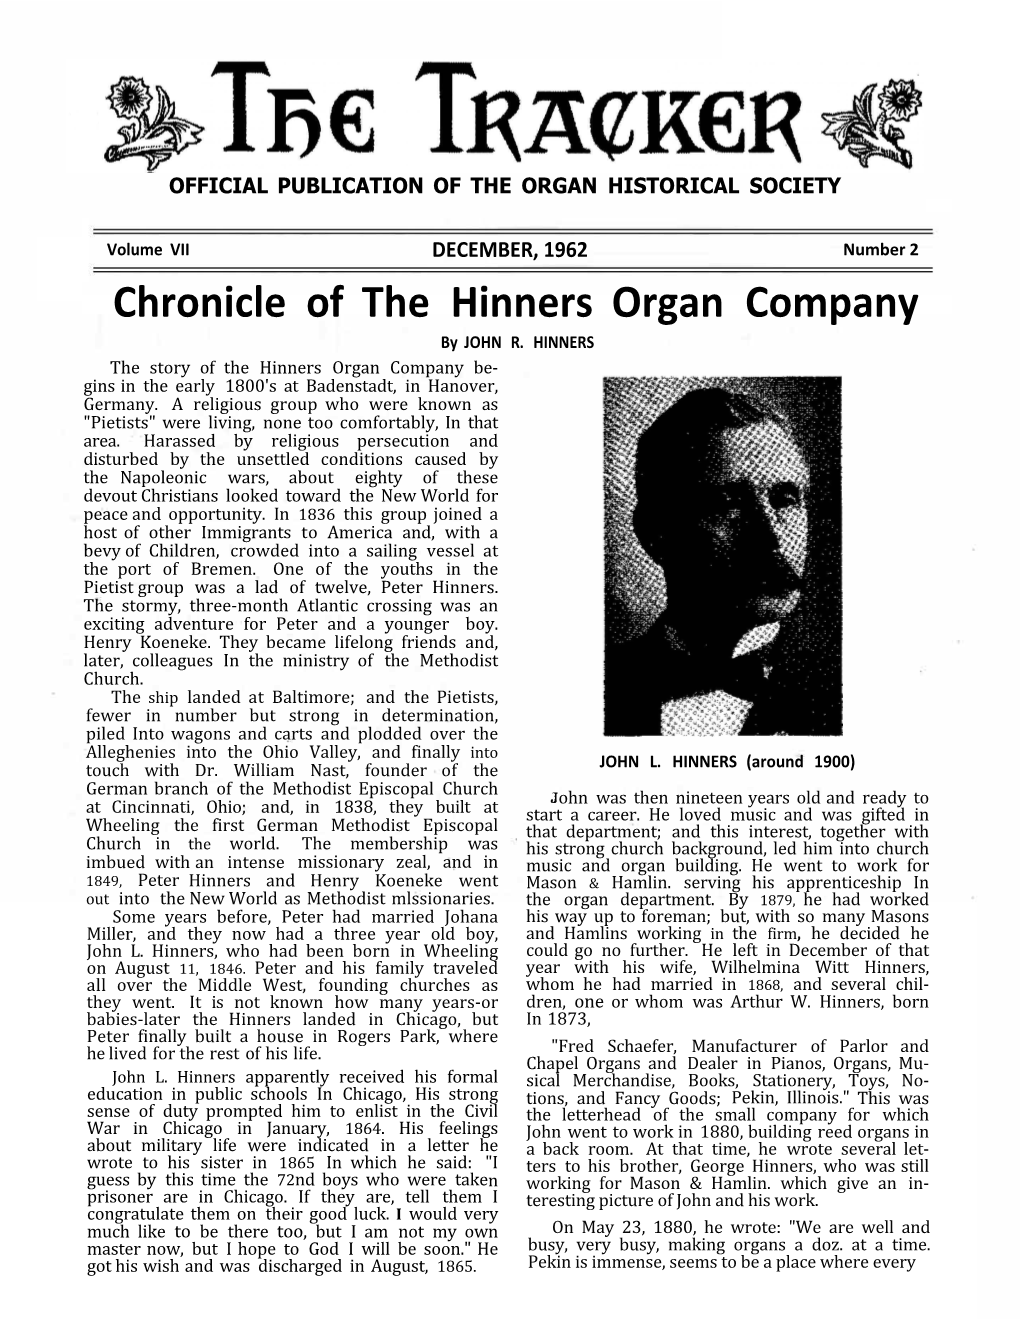 Chronicle of the Hinners Organ Company by JOHN R